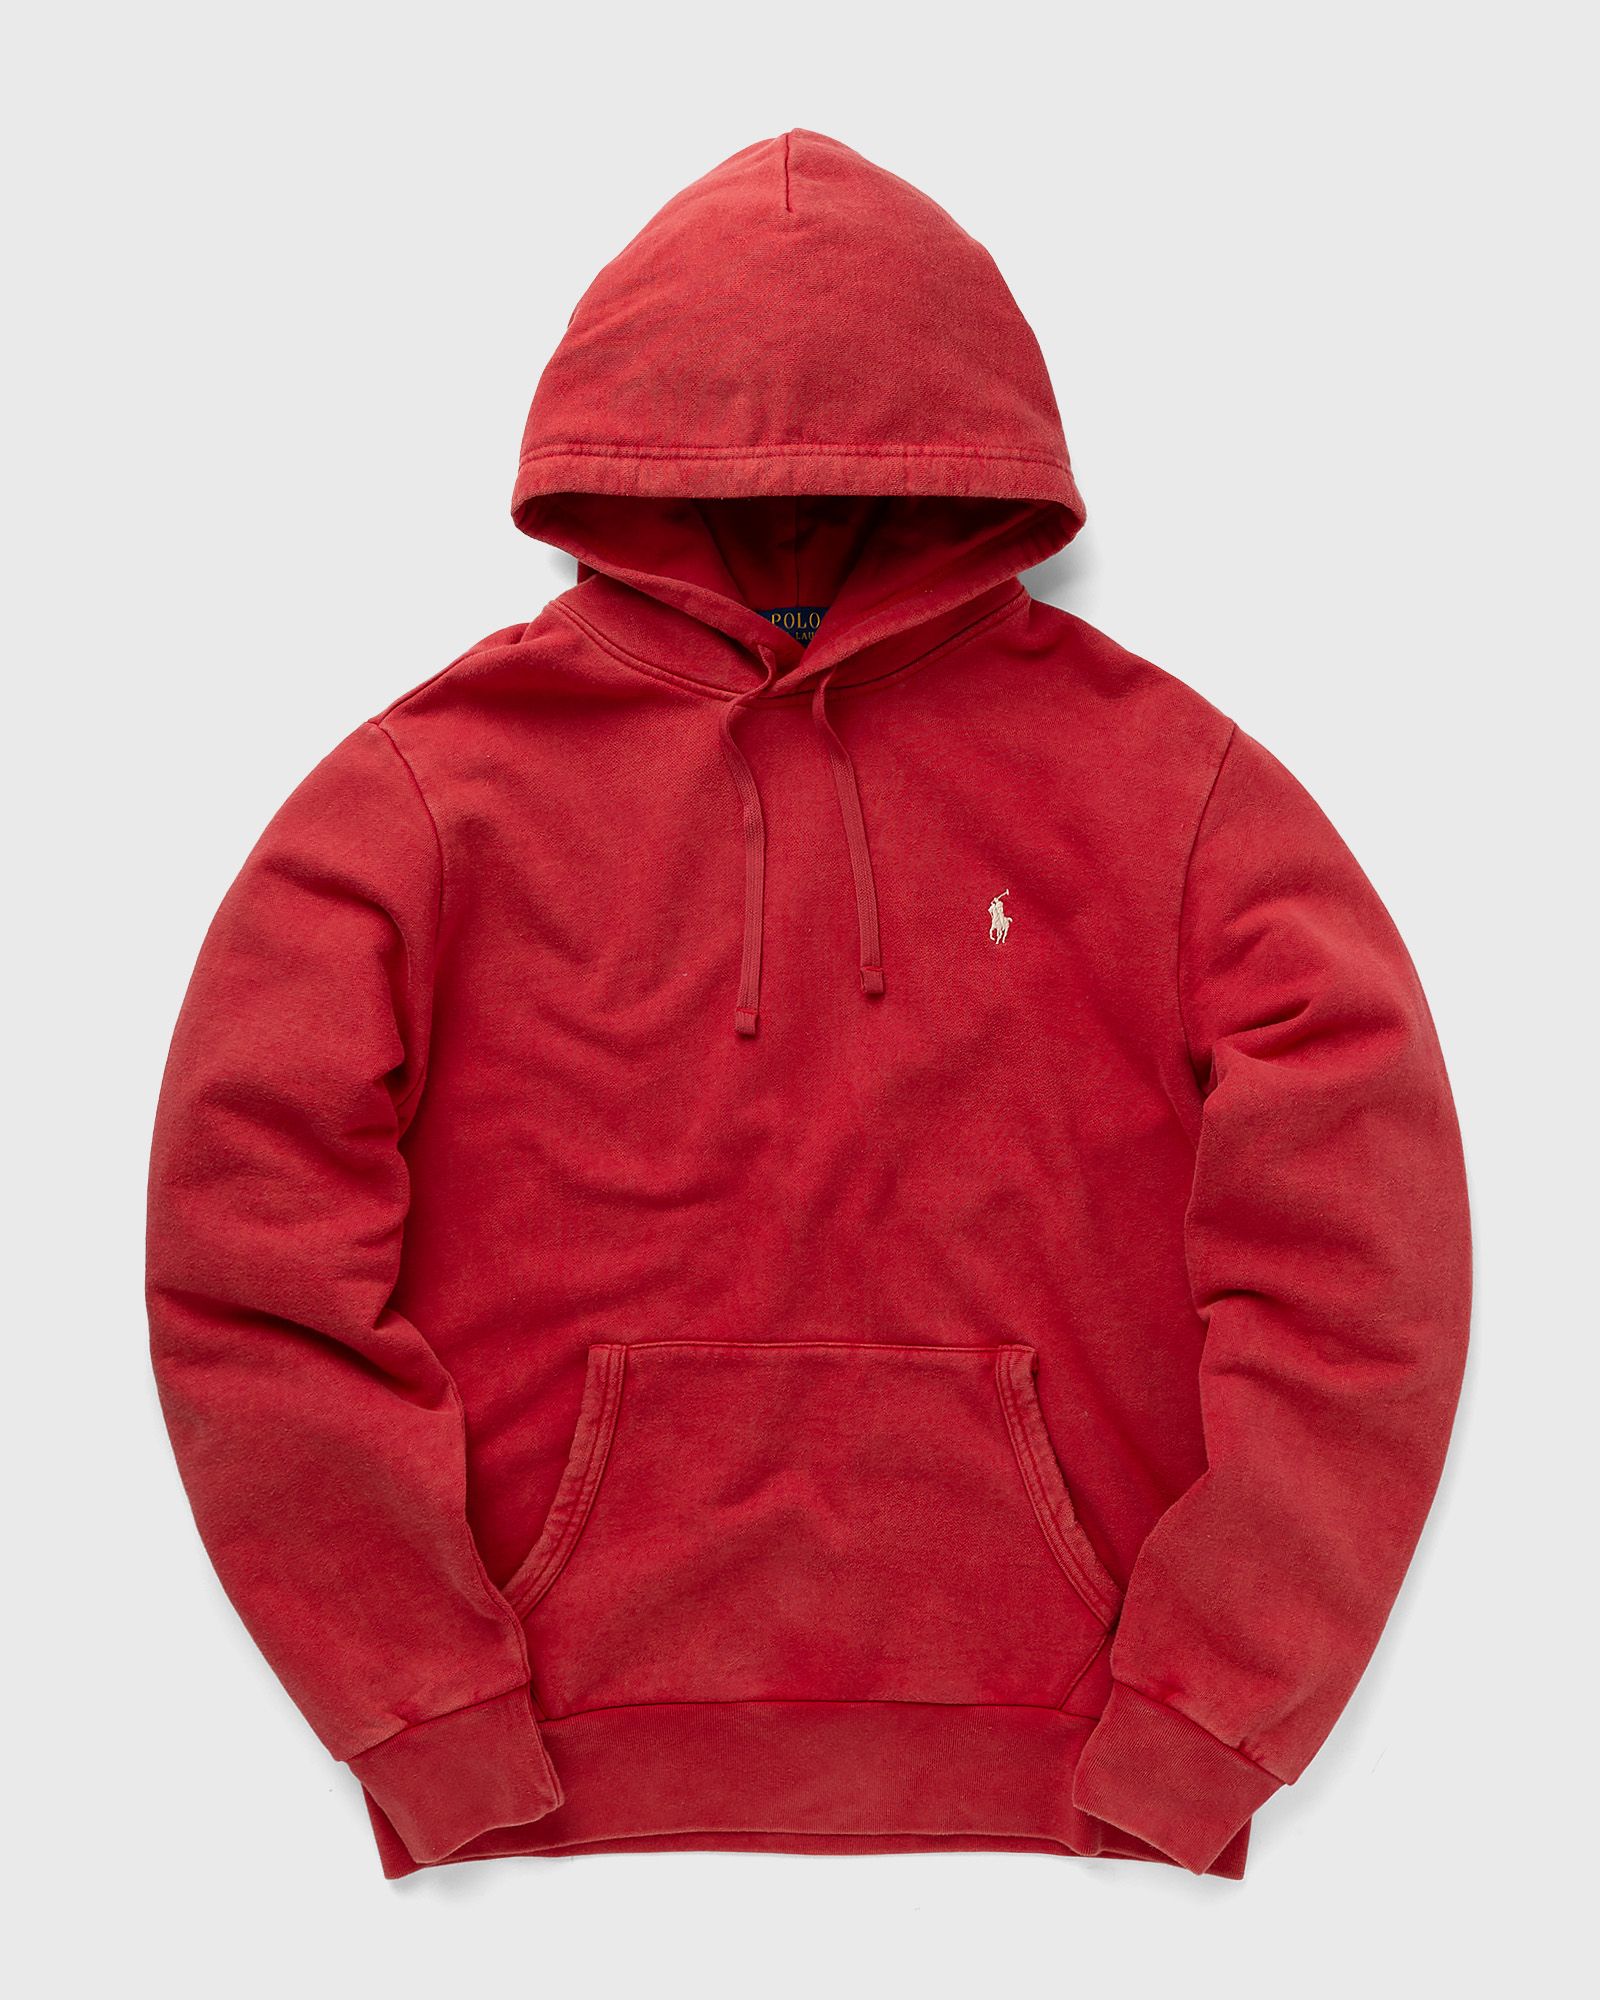 Polo Ralph Lauren - long sleeve-sweatshirt men hoodies red in größe:xxl